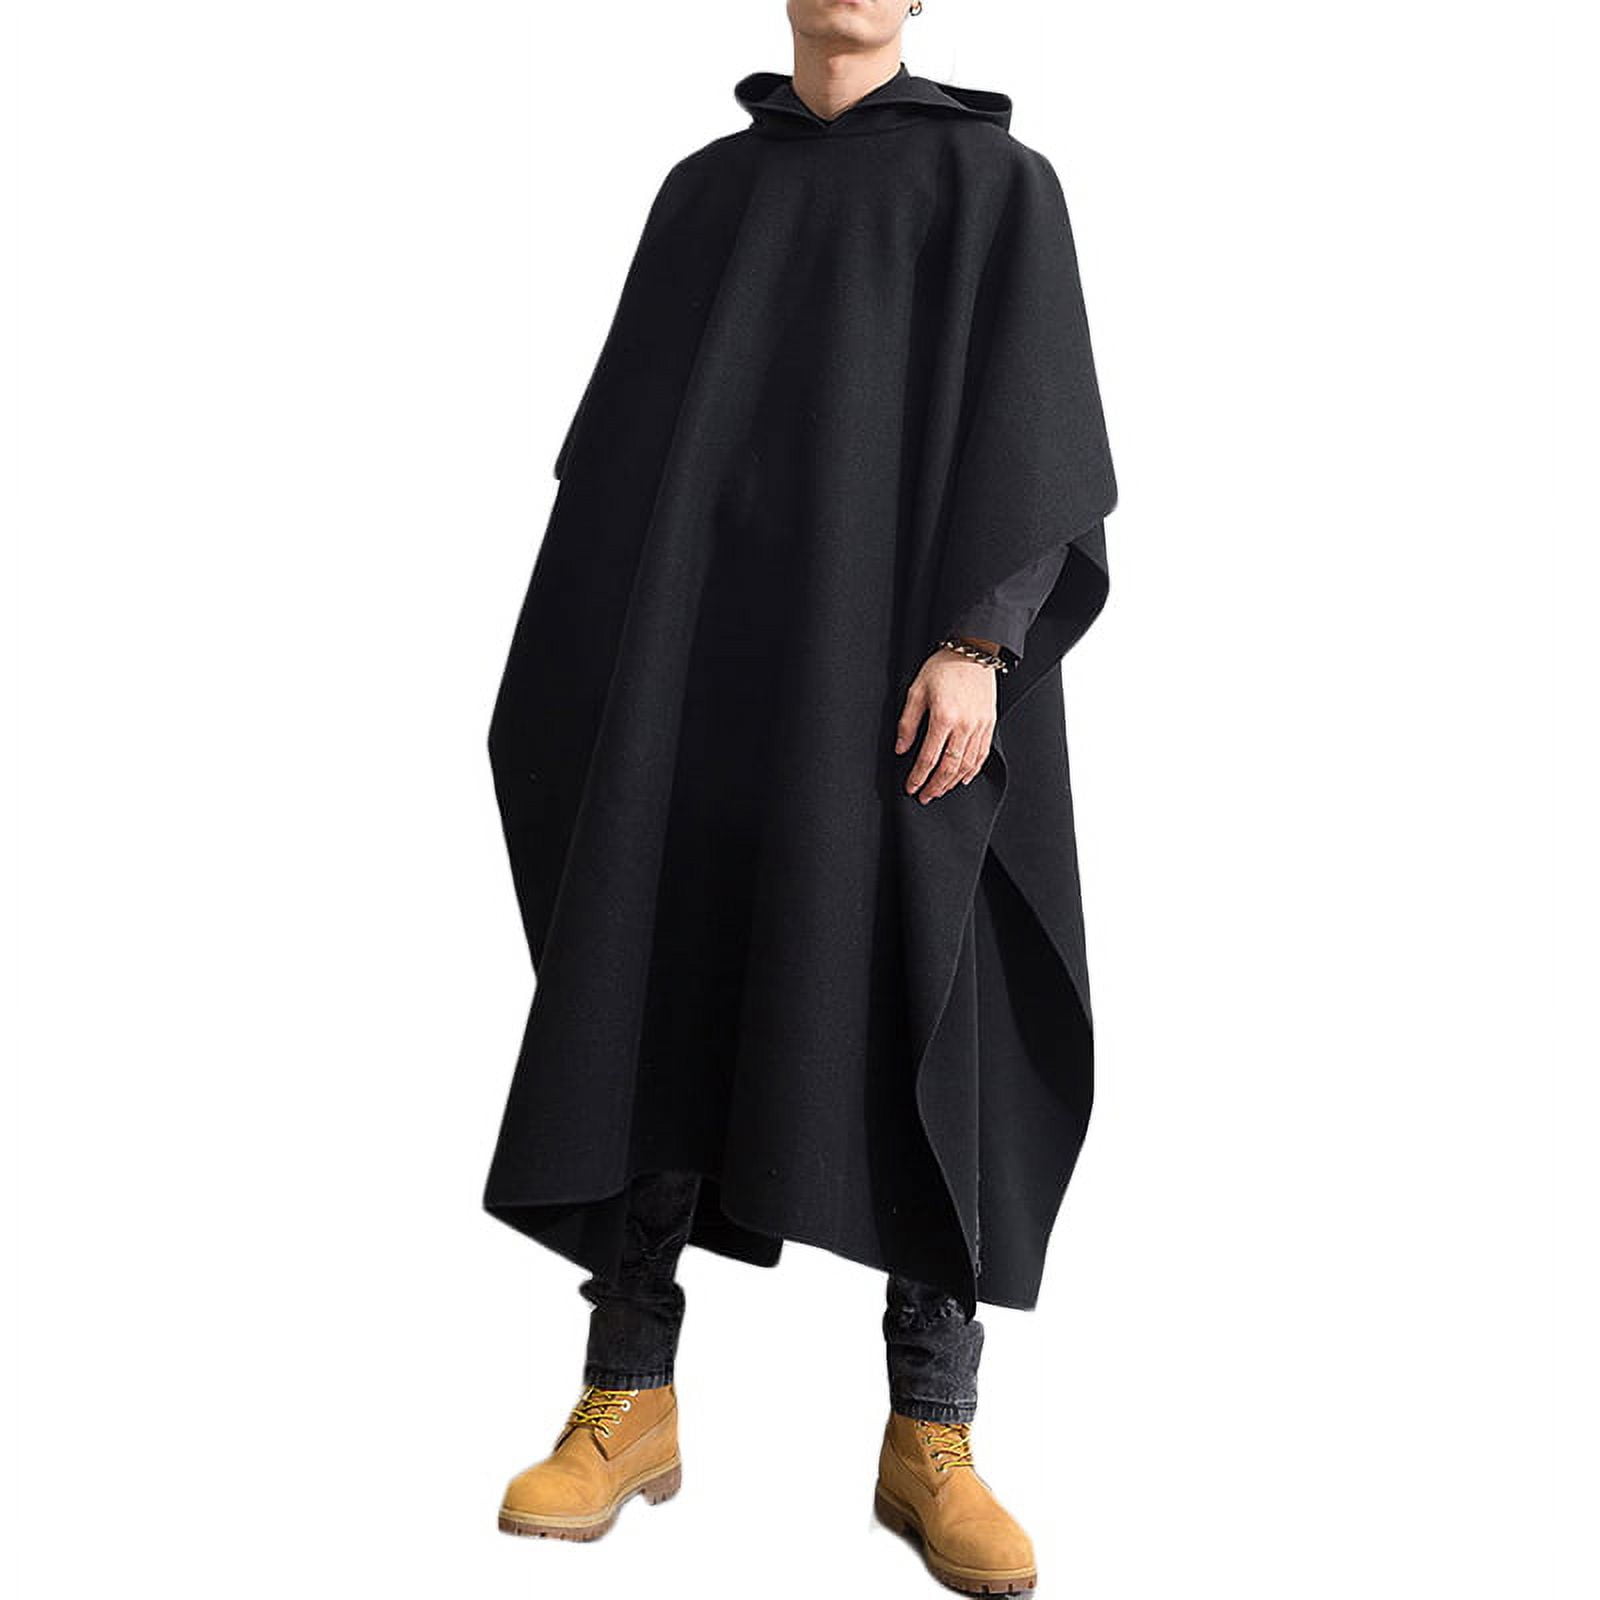 INCERUN Men's Gothic Shawl Hooded Poncho Cape Cloak Punk Baggy Coat ...